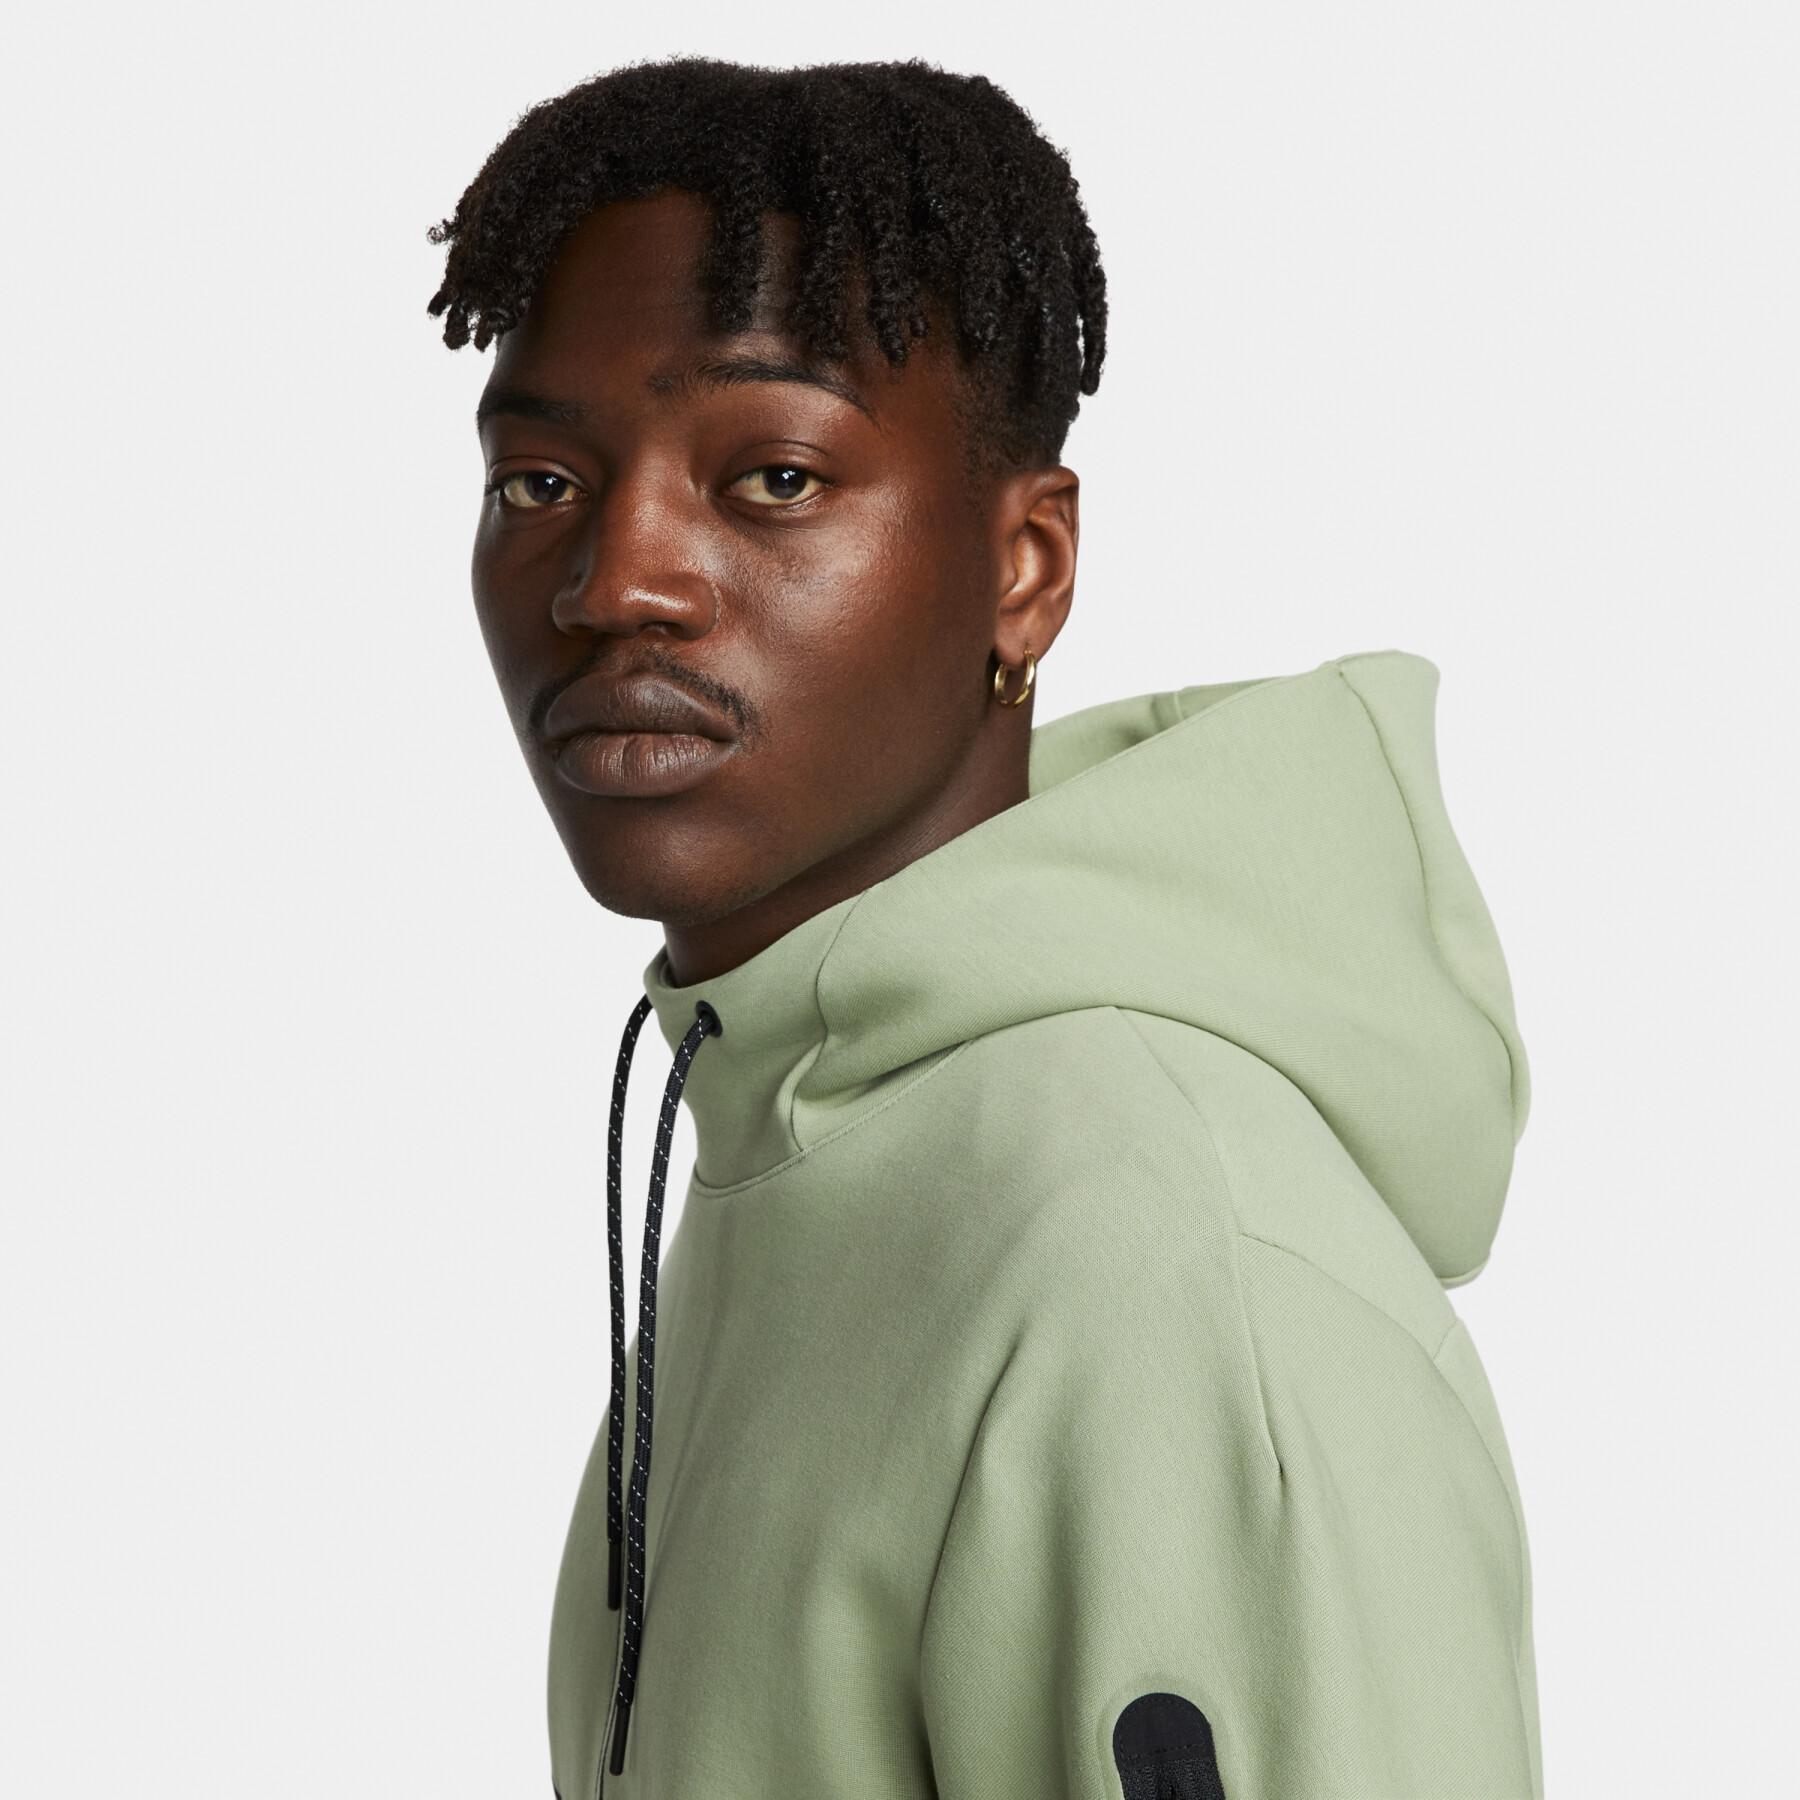 Sweatshirt à capuche Nike Tech GX